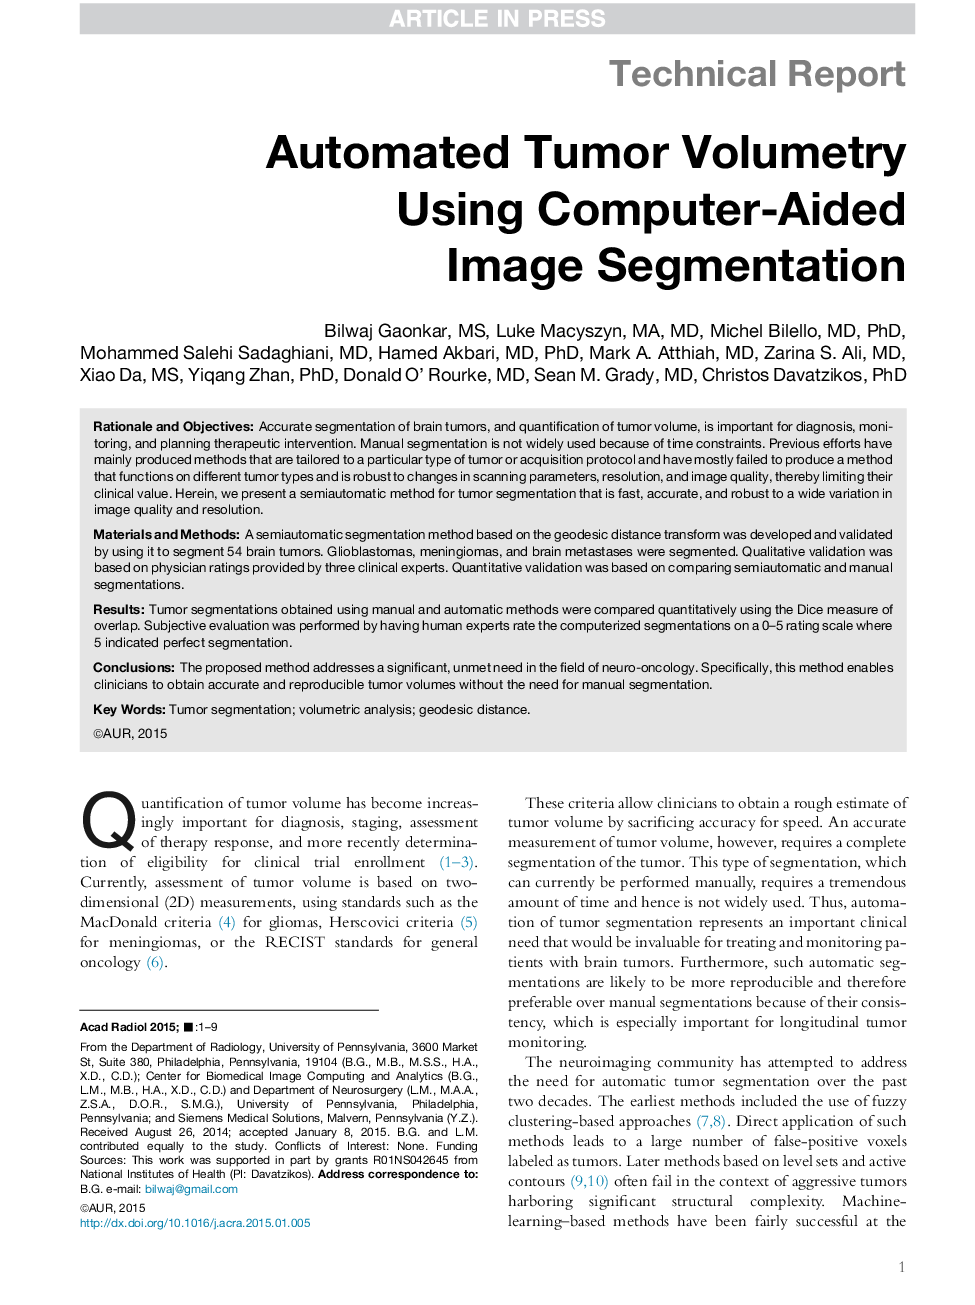 Automated Tumor Volumetry Using Computer-Aided Image Segmentation